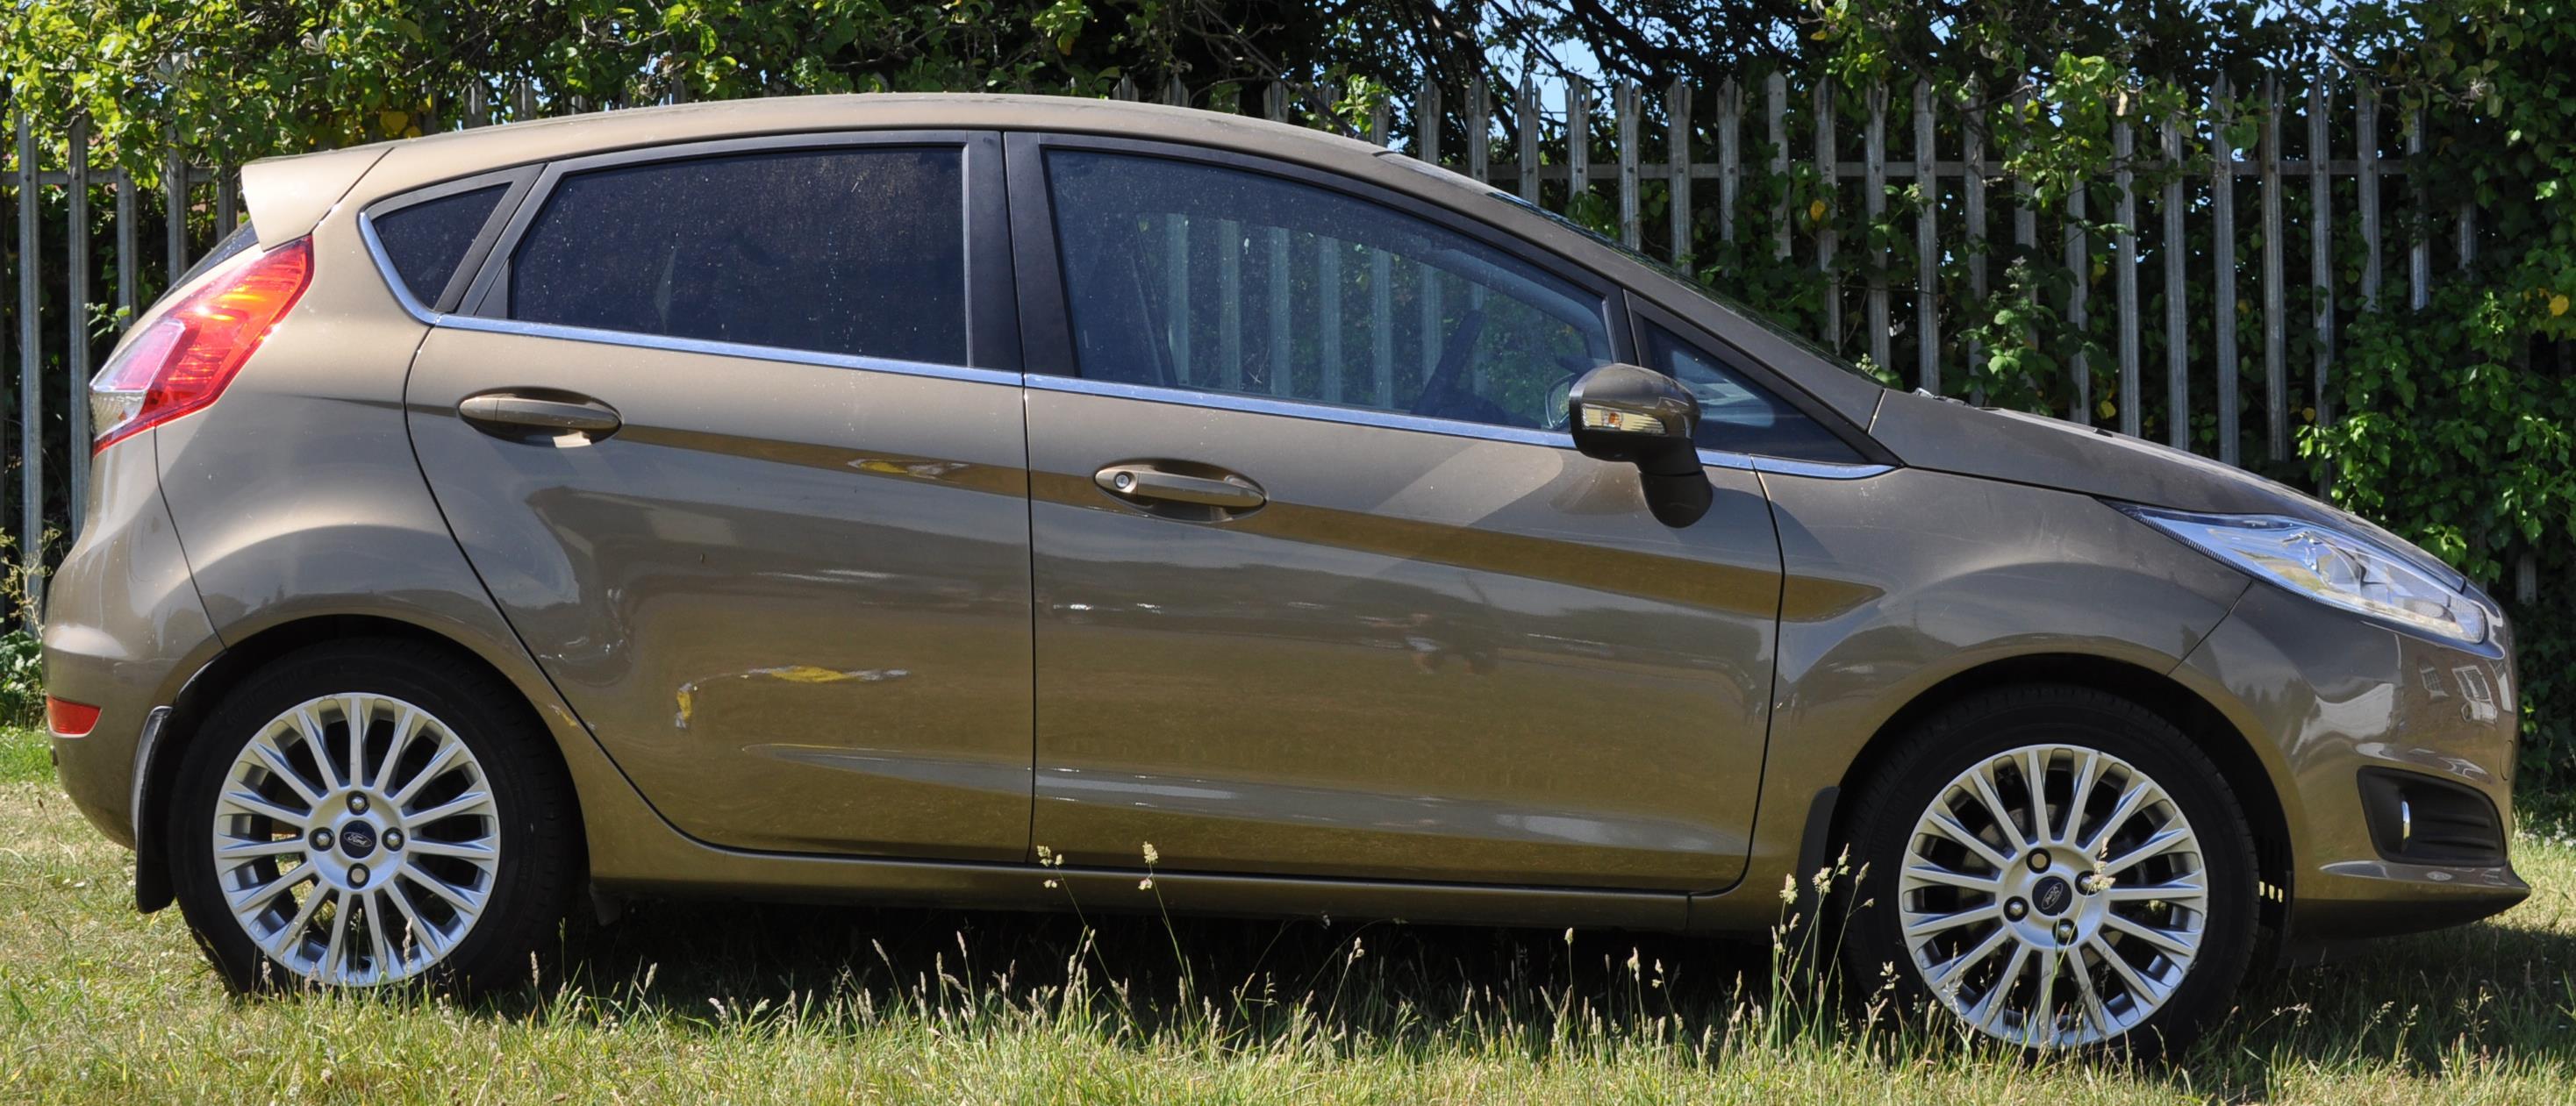 WR13 BJK - Ford Fiesta - Automatic - A 2013 Ford Fiesta in metallic gold, 1596cc, Titanium, petrol - Image 4 of 61